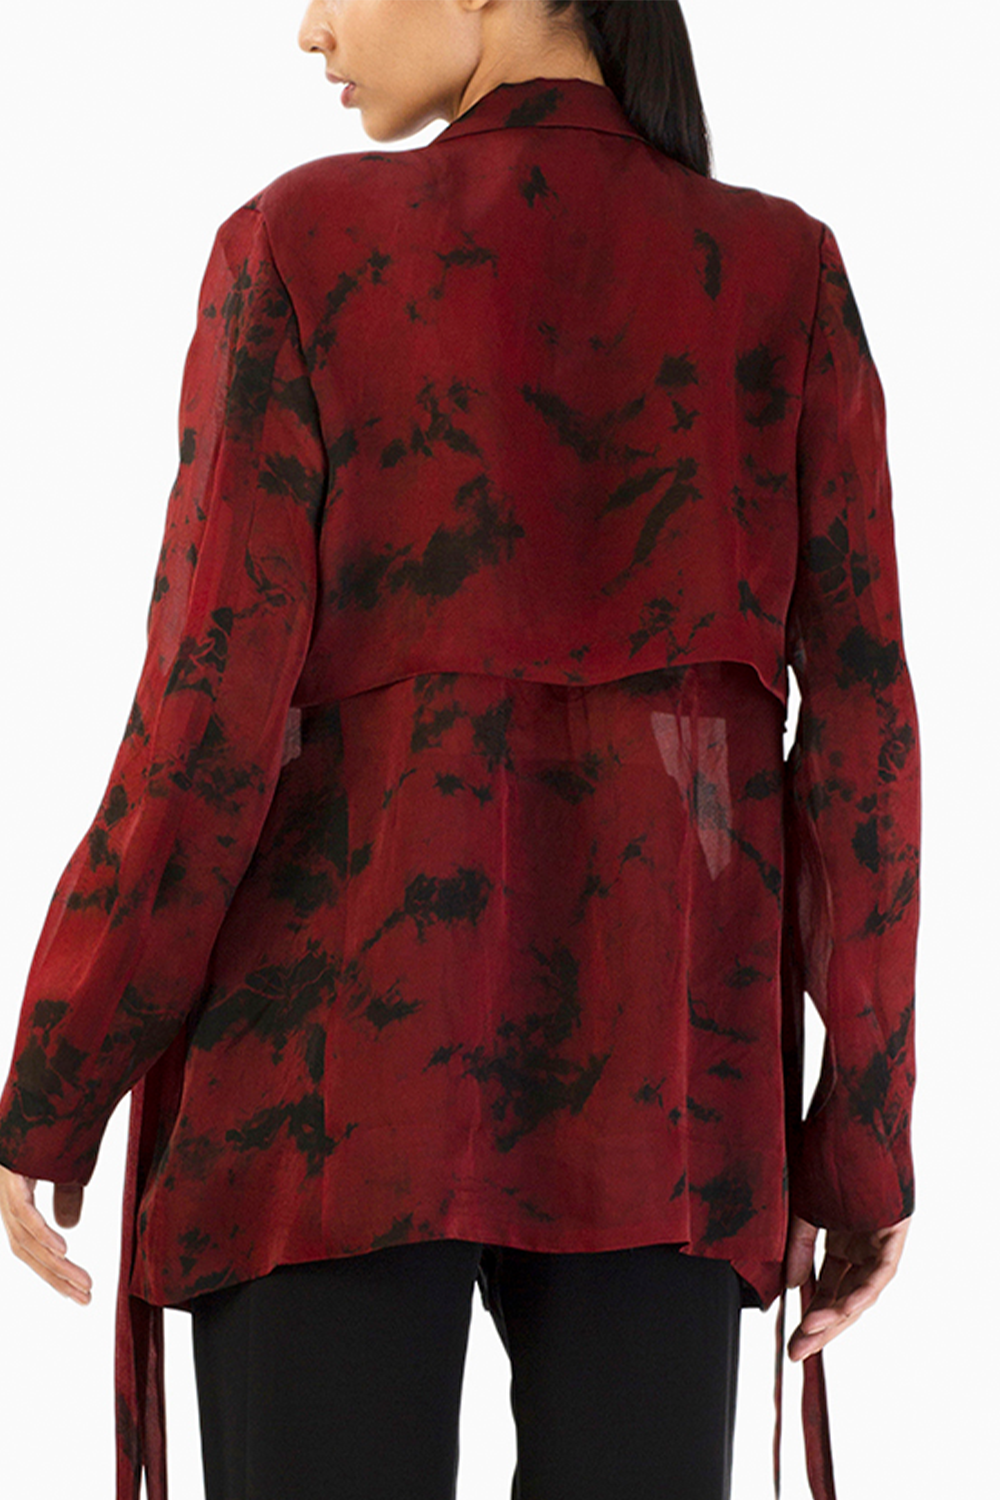 Scarlet Shadows Silk Jacket